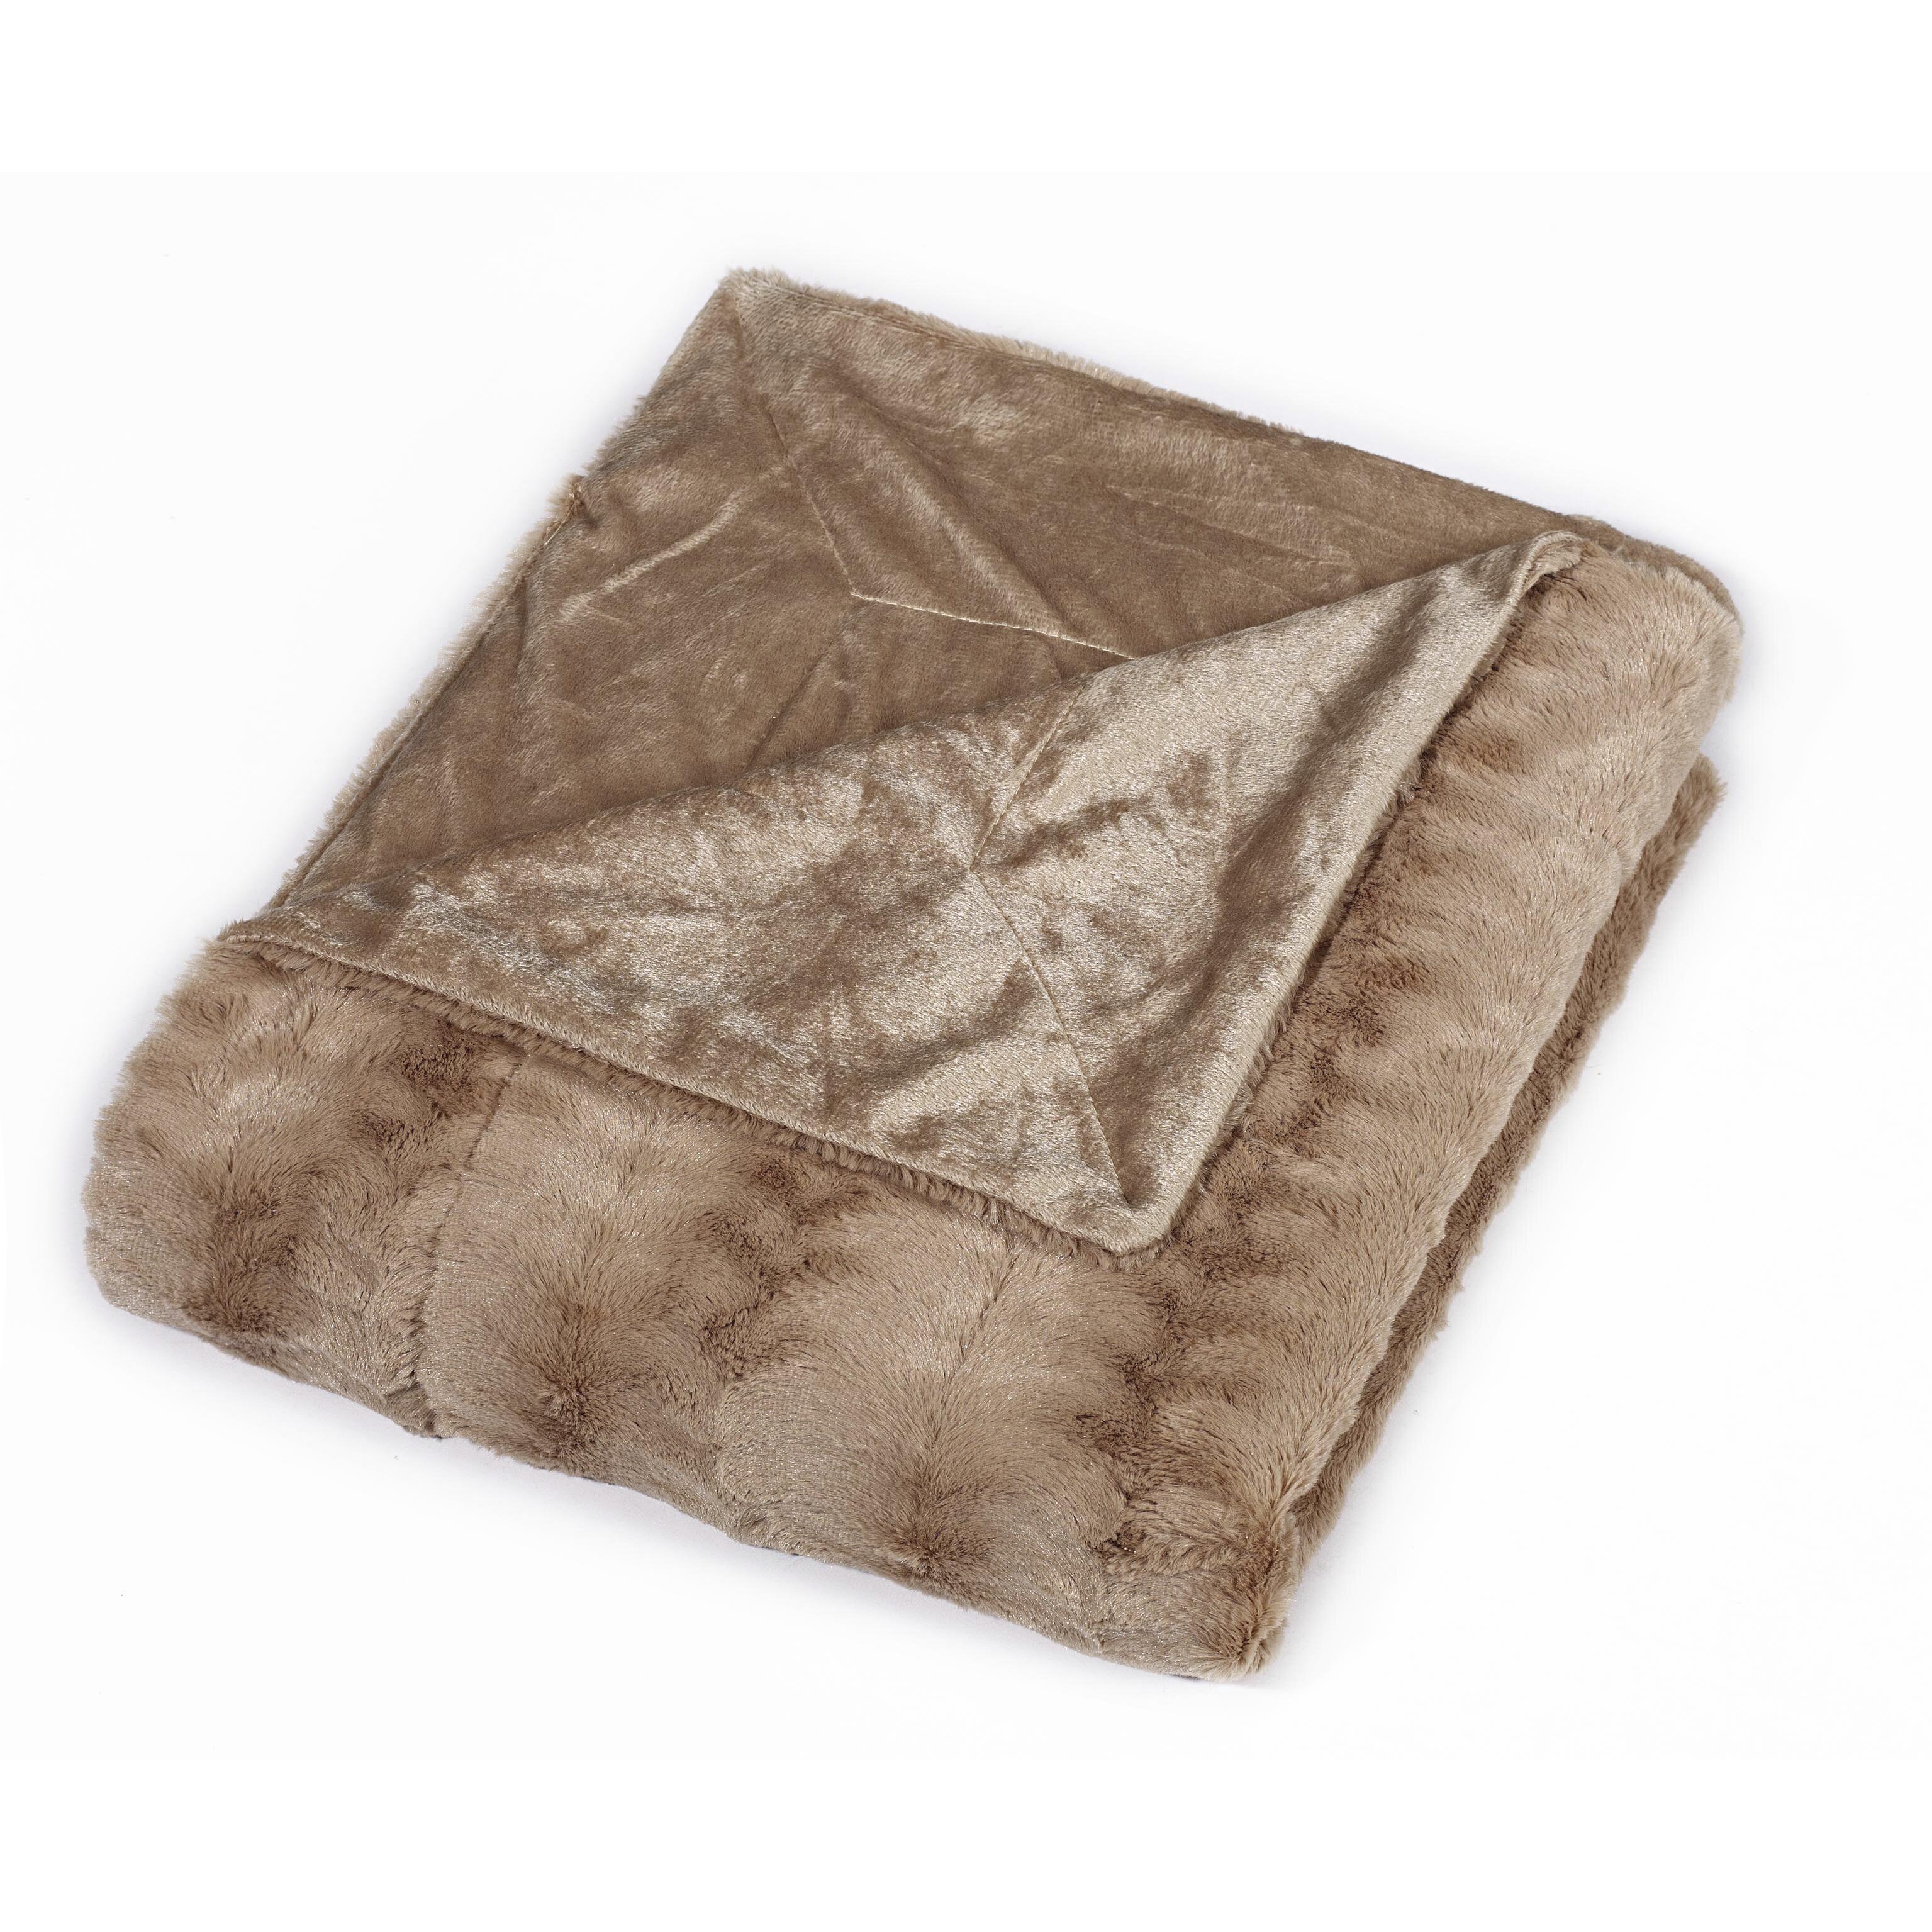 Luxe Baby Blanket - World's Softest Faux Fur Blanket